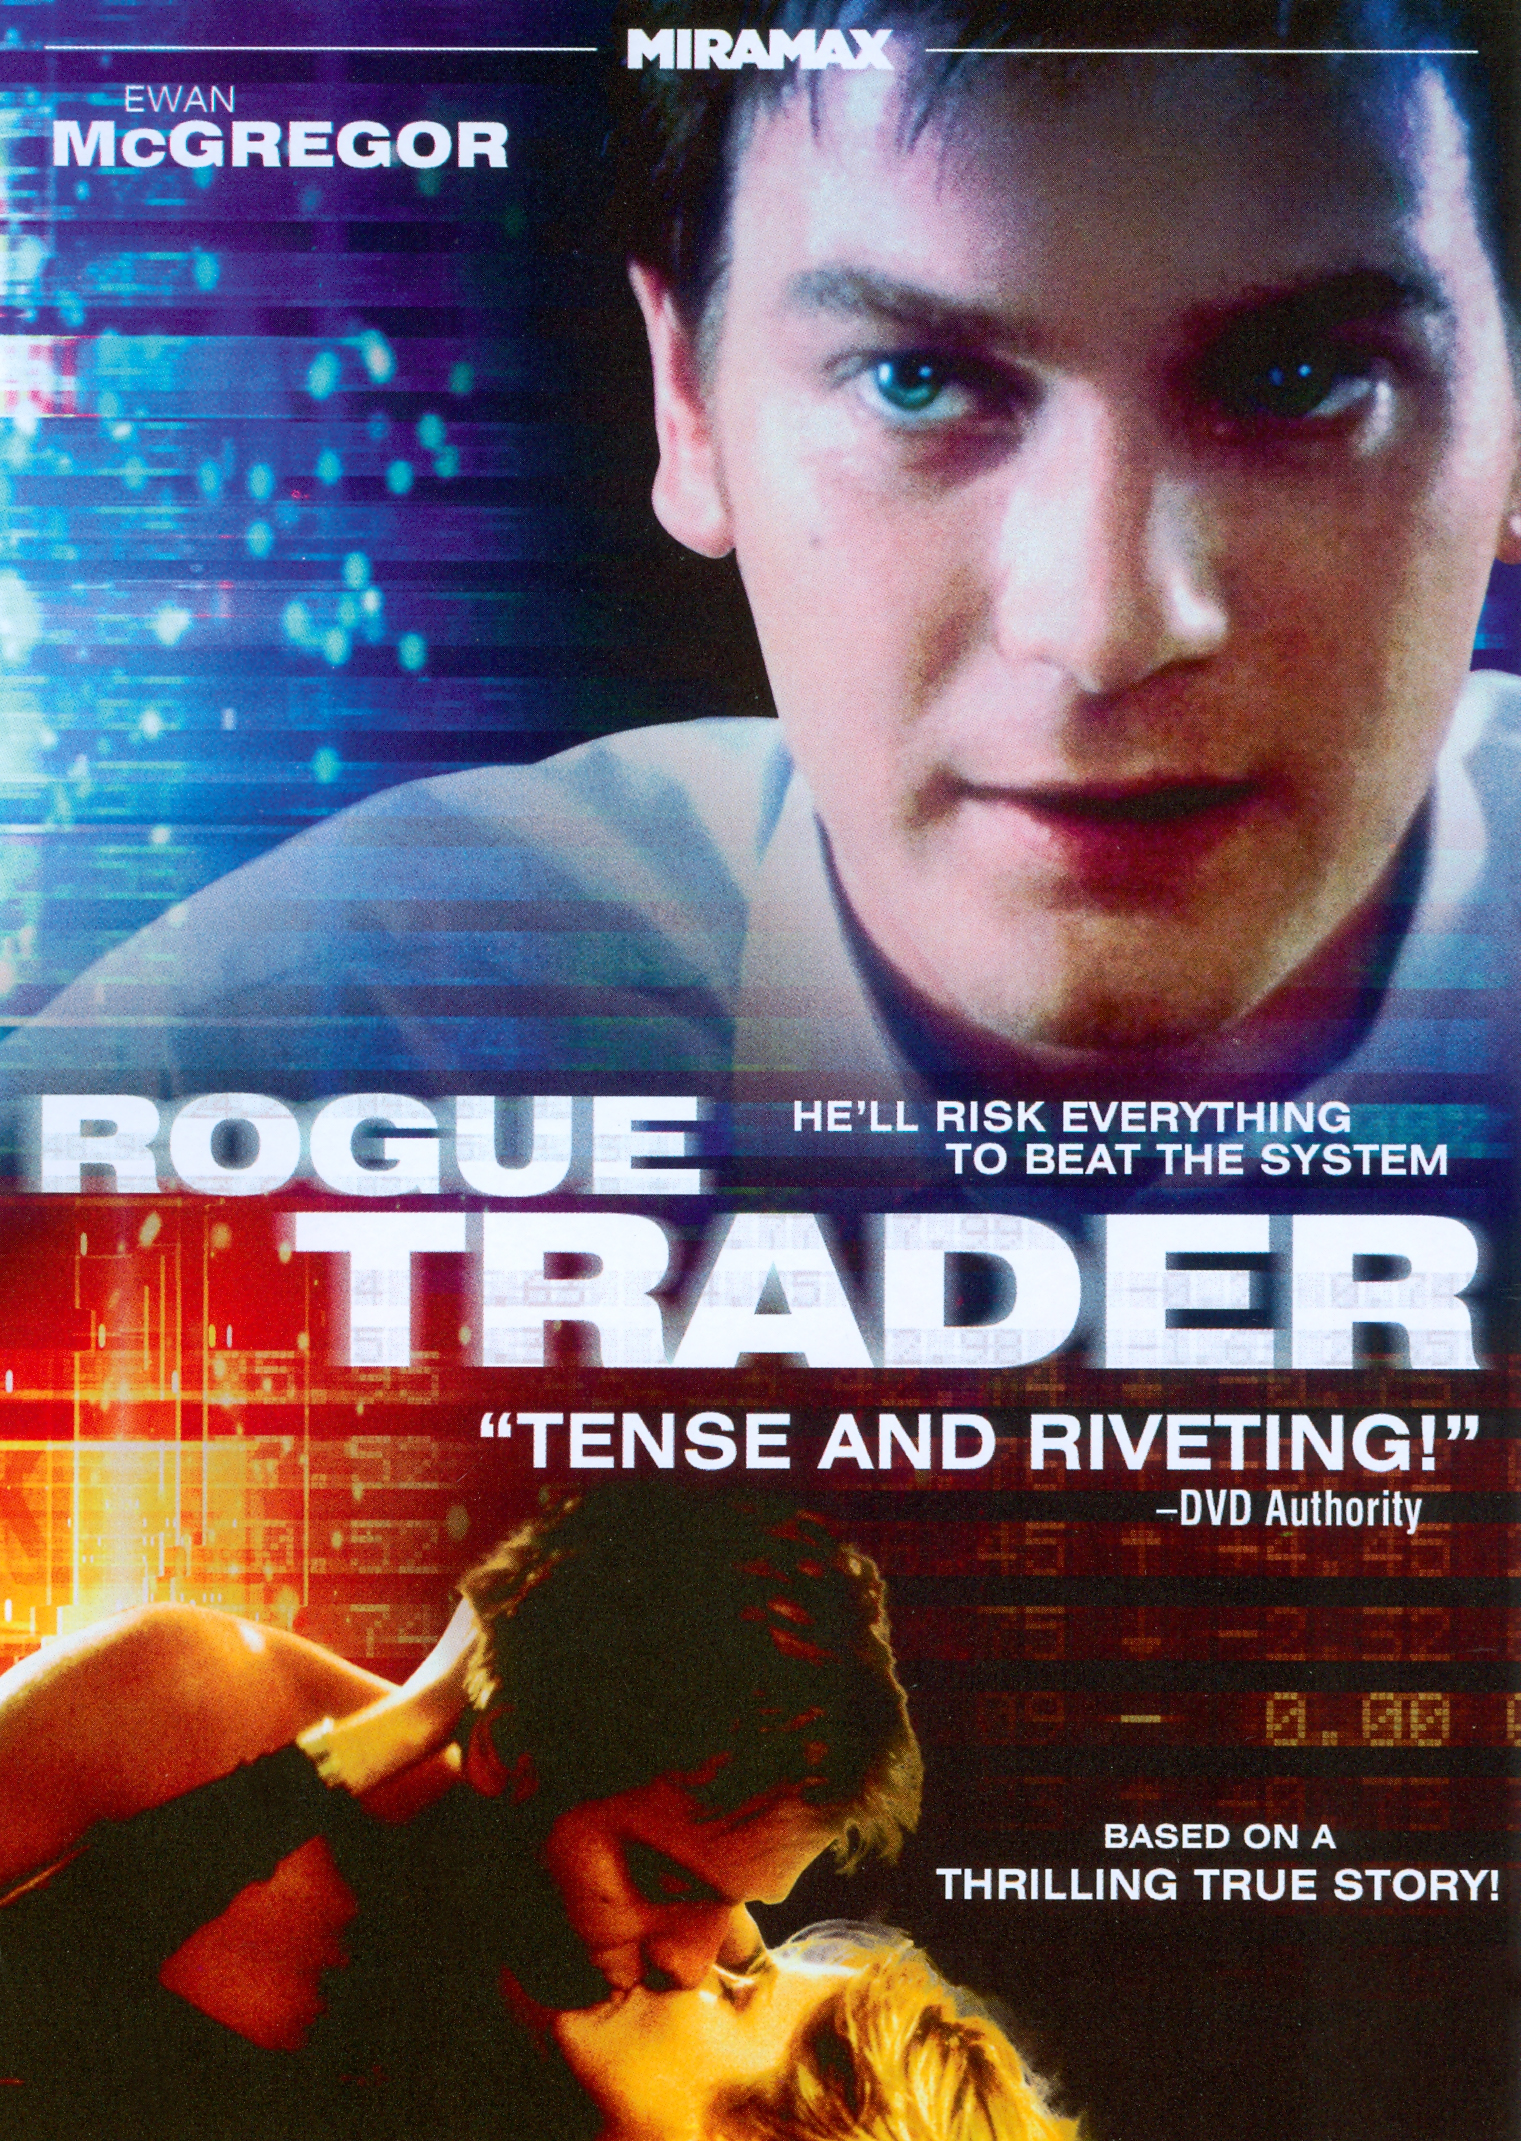 The rogue trader movie